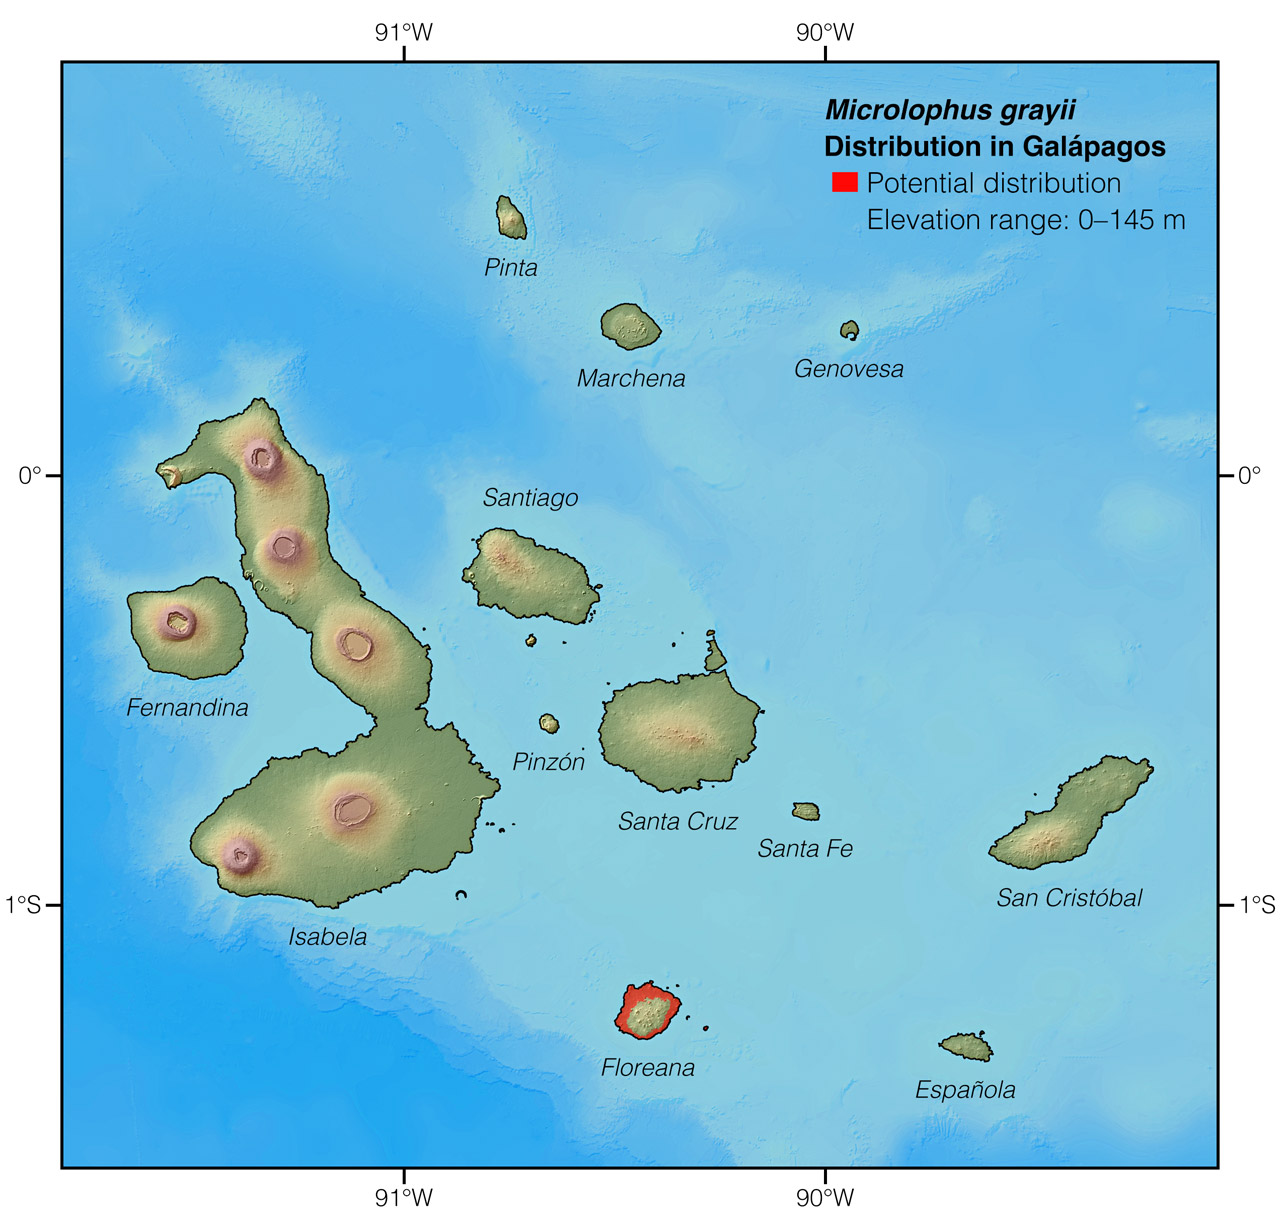 Distribution of Microlophus grayii in Galápagos